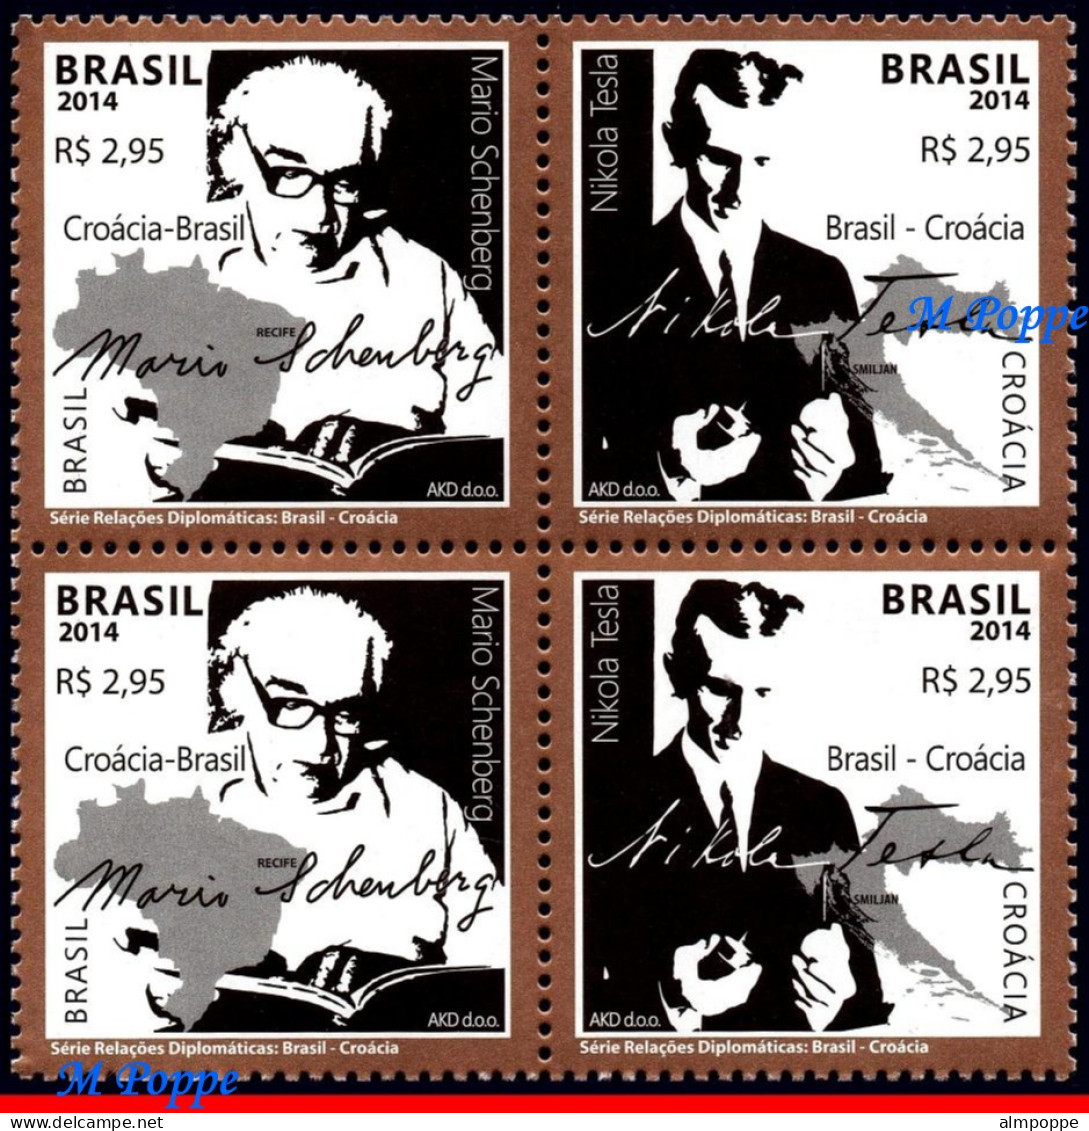 Ref. BR-3286-Q BRAZIL 2014 - RELATIONSHIP WITH CROATIA, M�RIO SCHENBERG & NIKOLA TESLA, MNH, FAMOUS PEOPLE 4V Sc# 3286 - Blocks & Kleinbögen